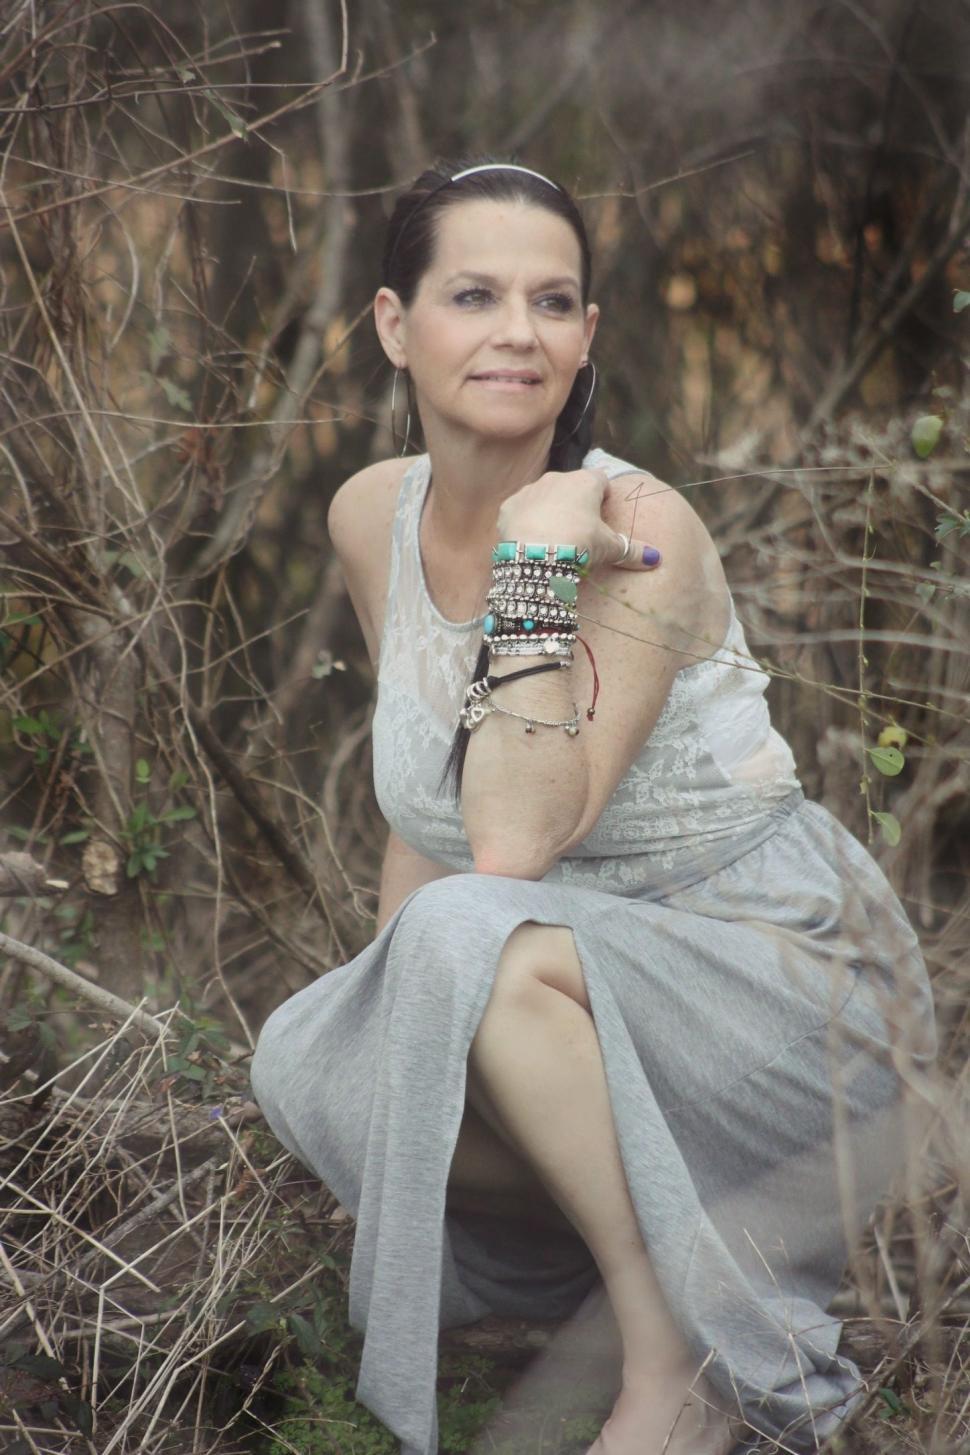 Free Image of Fashionable Woman wearing bracelets sitting amidst trees  